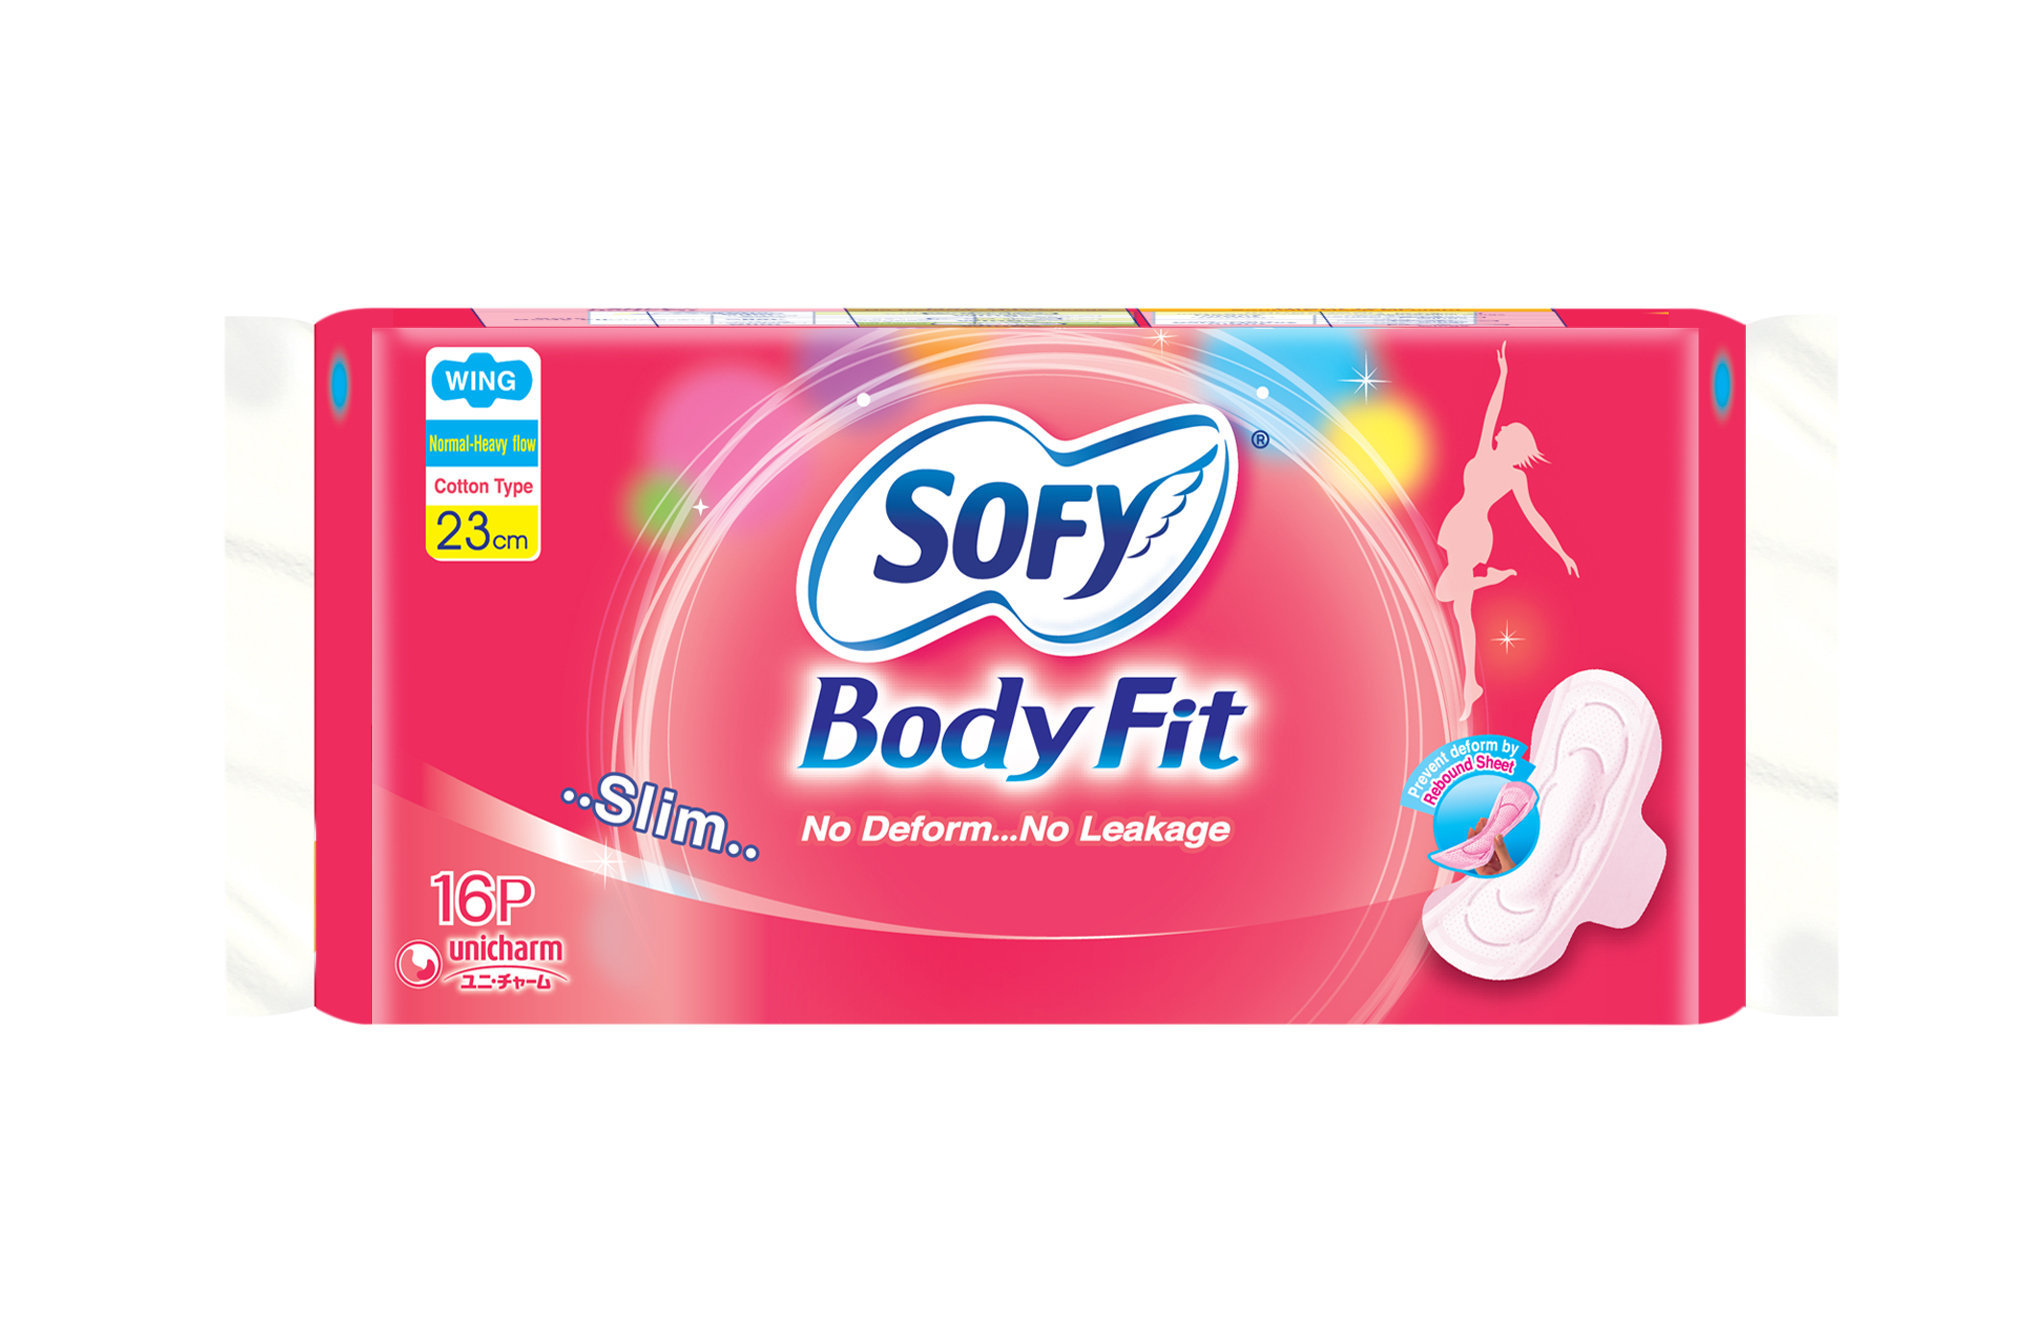 SOFY® Body Fit Day Slim Wing 23cm 16pads